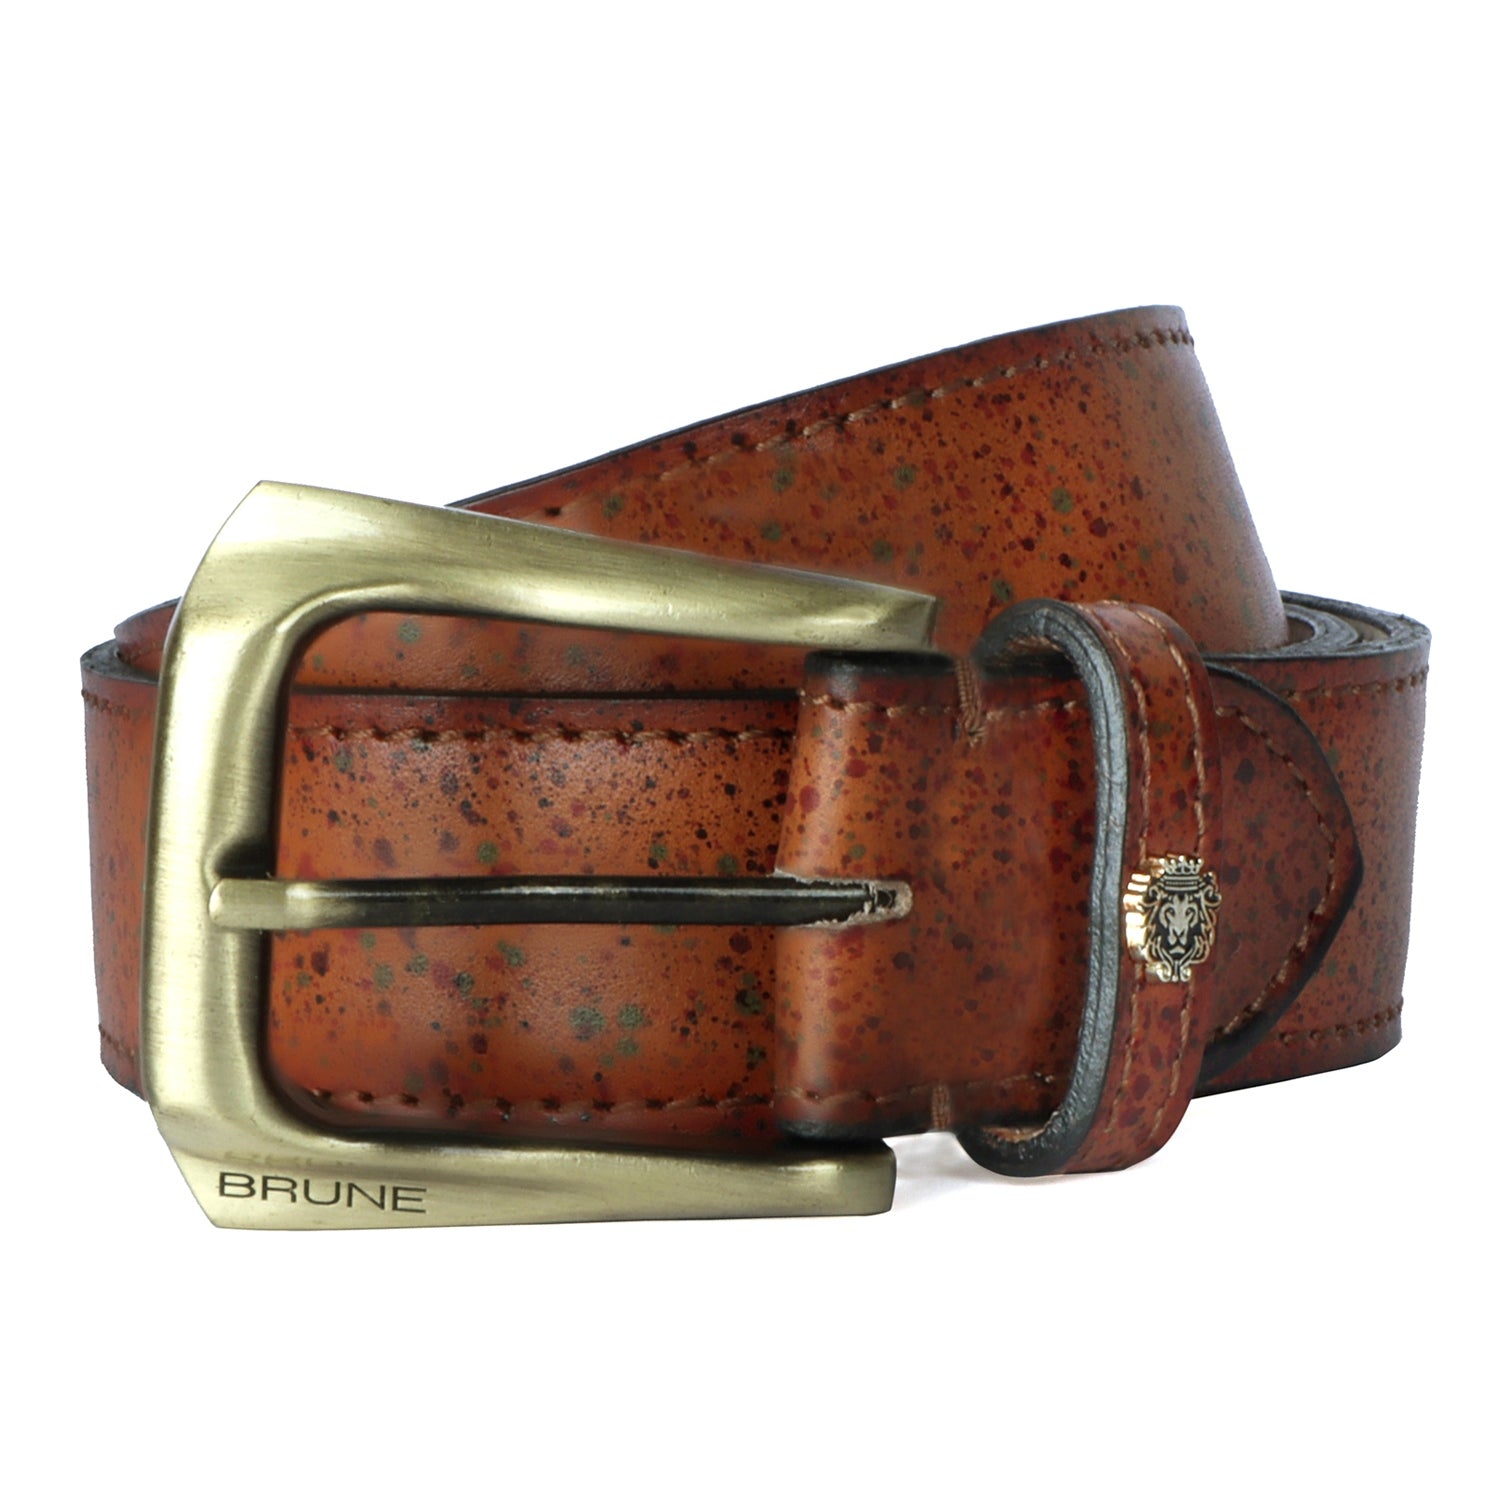 Shape leather belt